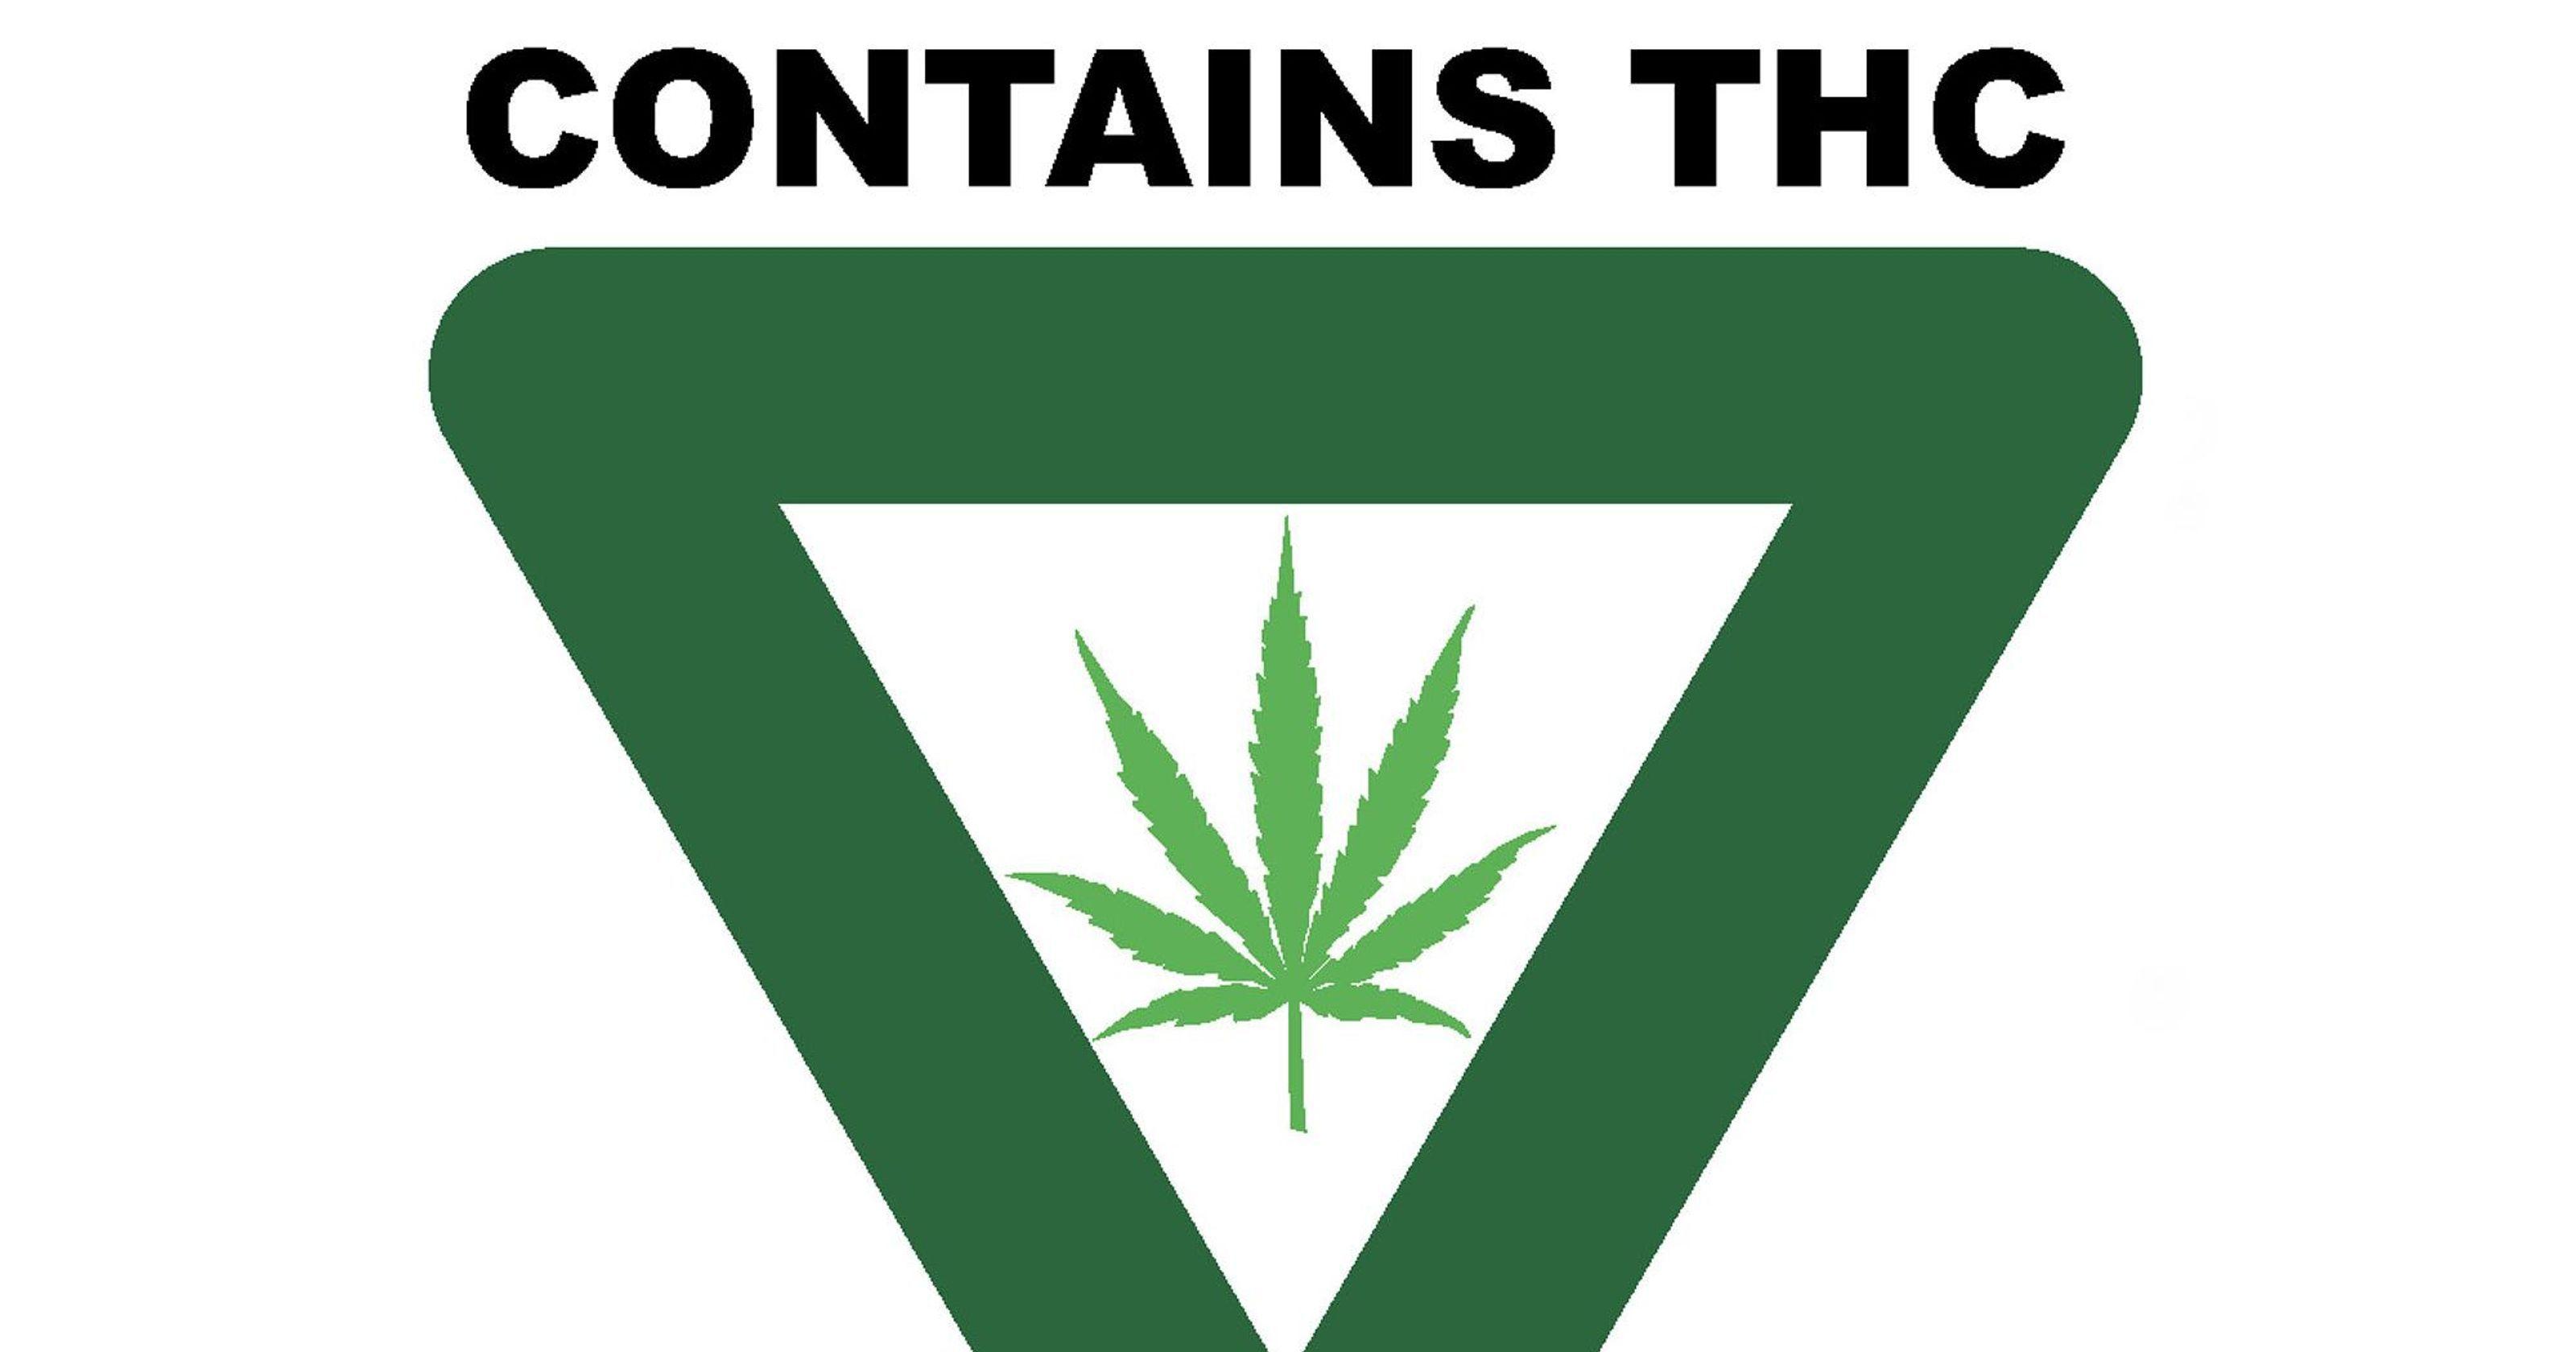 Marijuana.com Logo - Upside down, green triangle and cannabis leaf becomes pot symbol